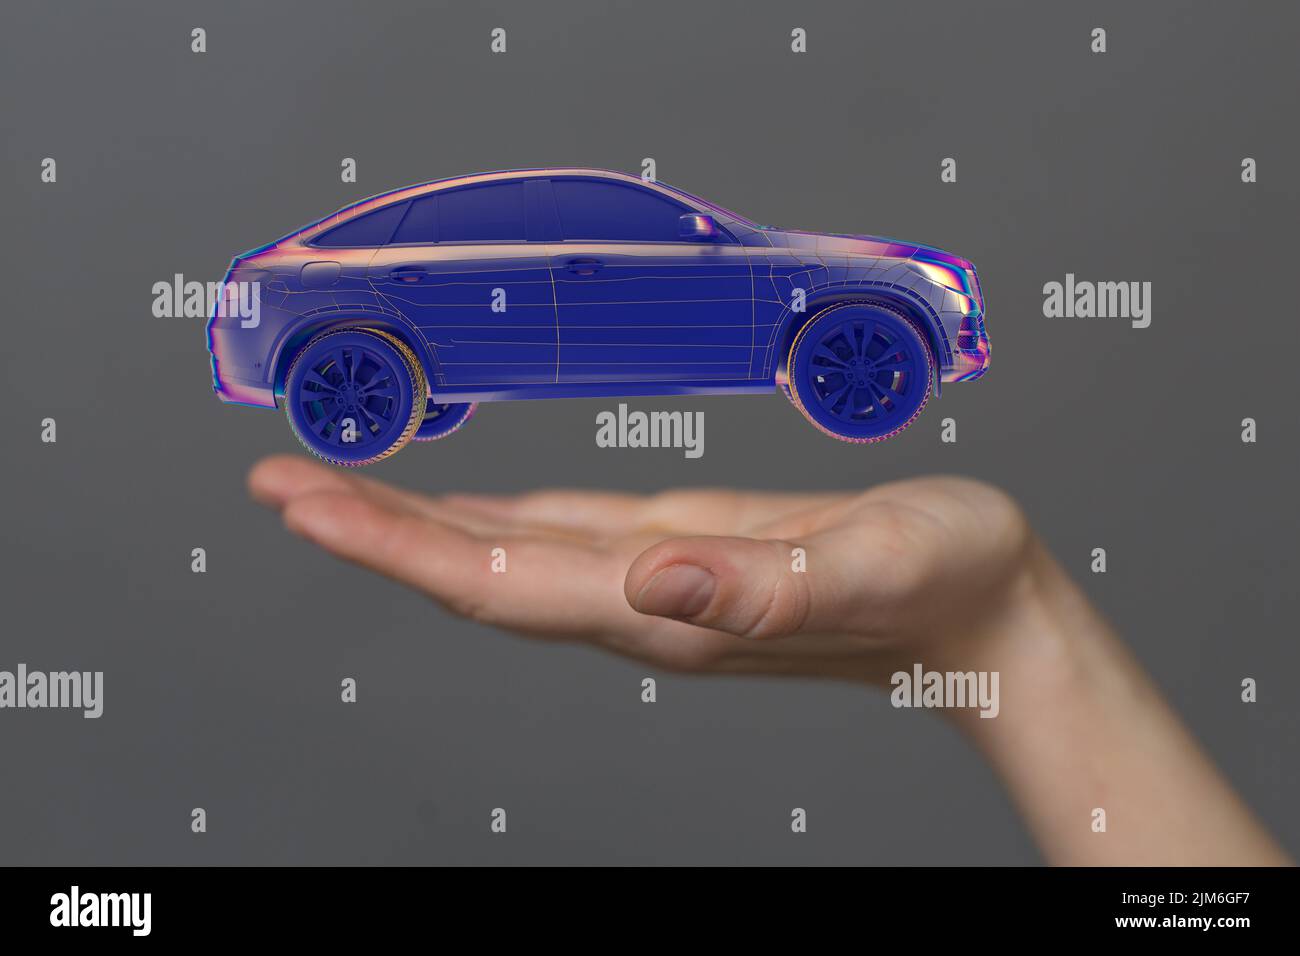 A hand showing the hologram of a 3D rendered futuristic autonomous car concept Stock Photo